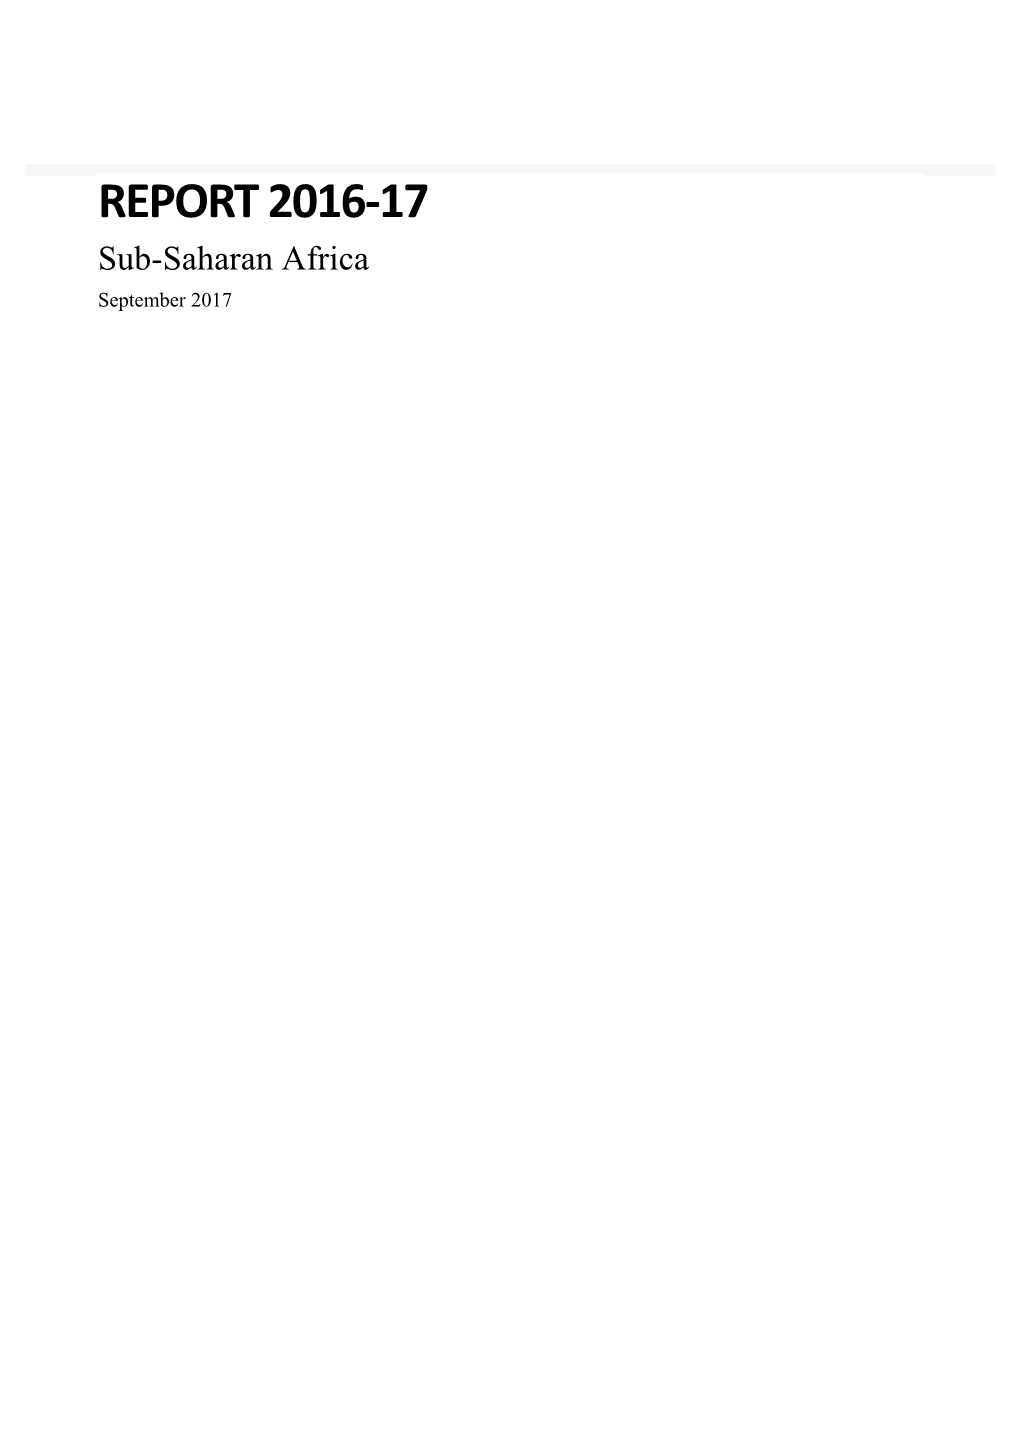 Sub-Saharan Africa Aid Program Performance Report 2016-17